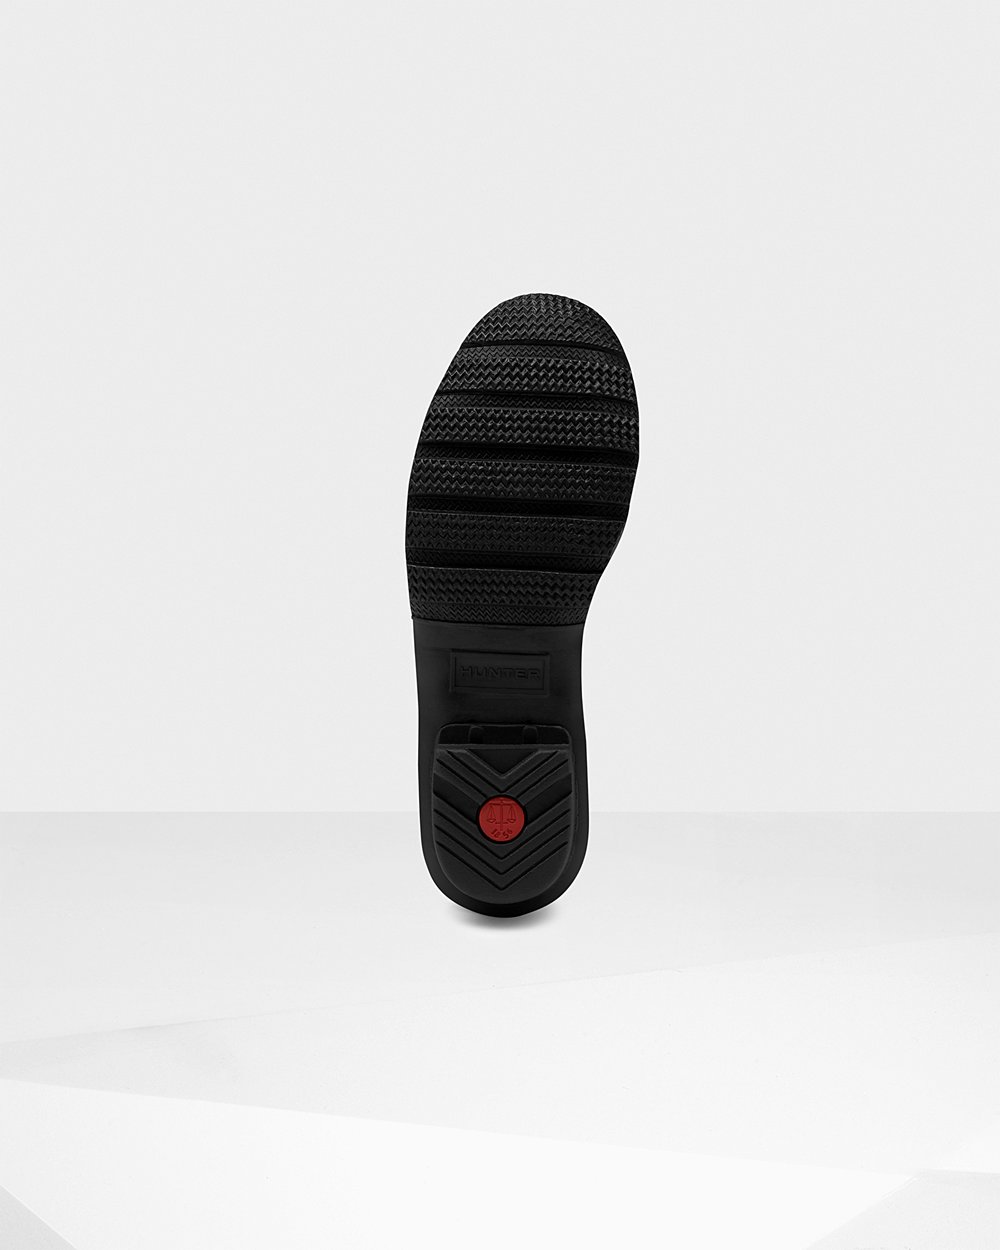 Womens Short Rain Boots - Hunter Original Exploded Logo Texture (27BCJMRLS) - Black